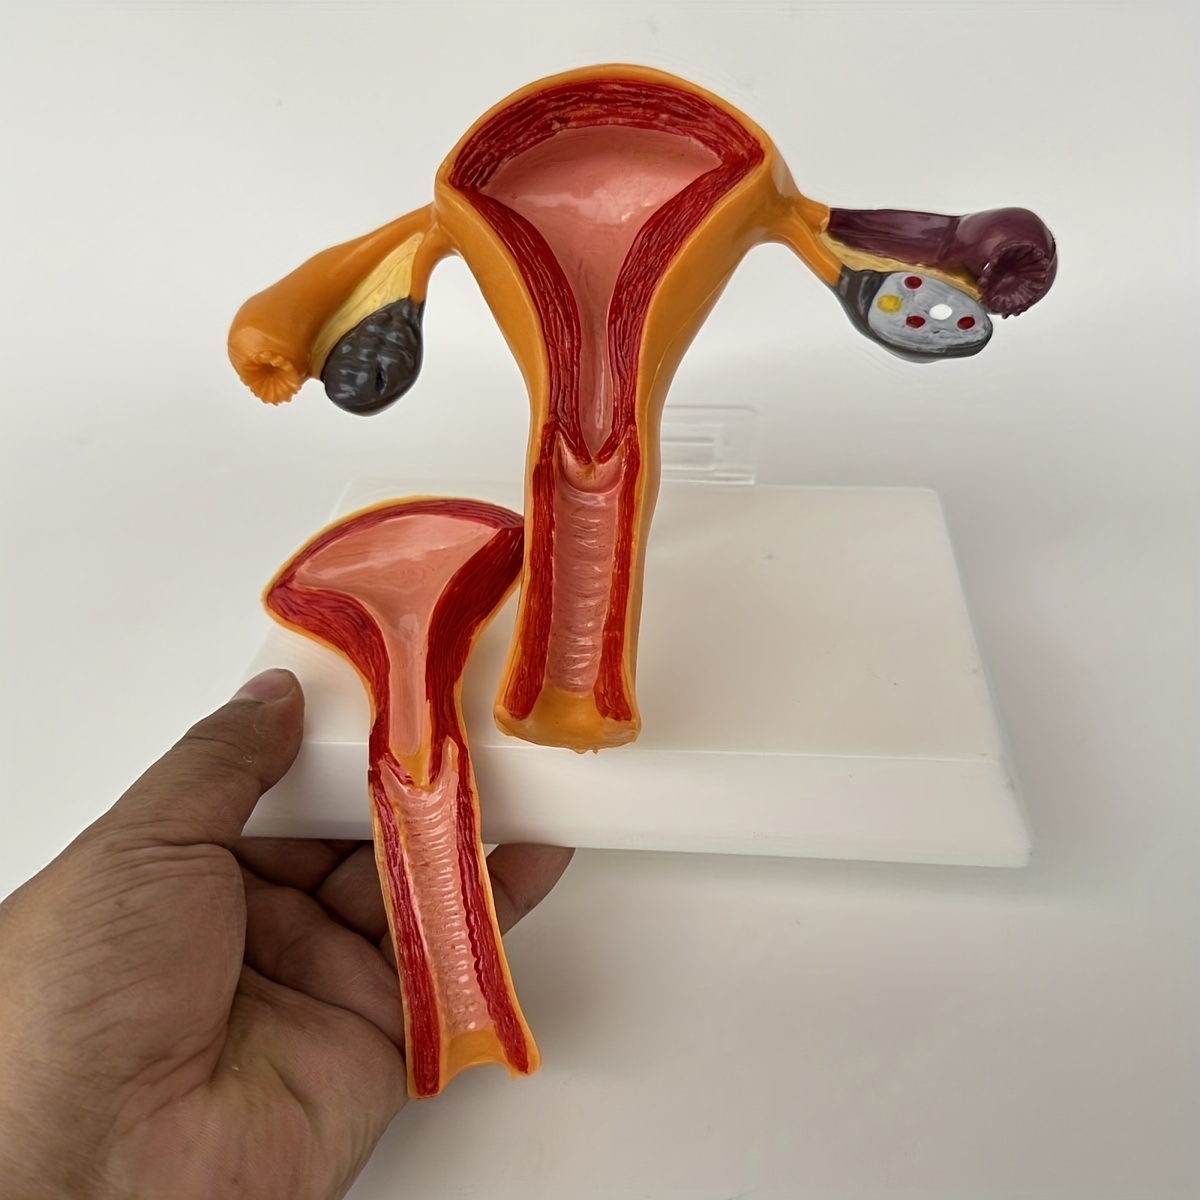 Modelo Anatómico Del Órgano Reproductor Femenino Útero Vagina Modelo De Útero Femenino Compre 5520